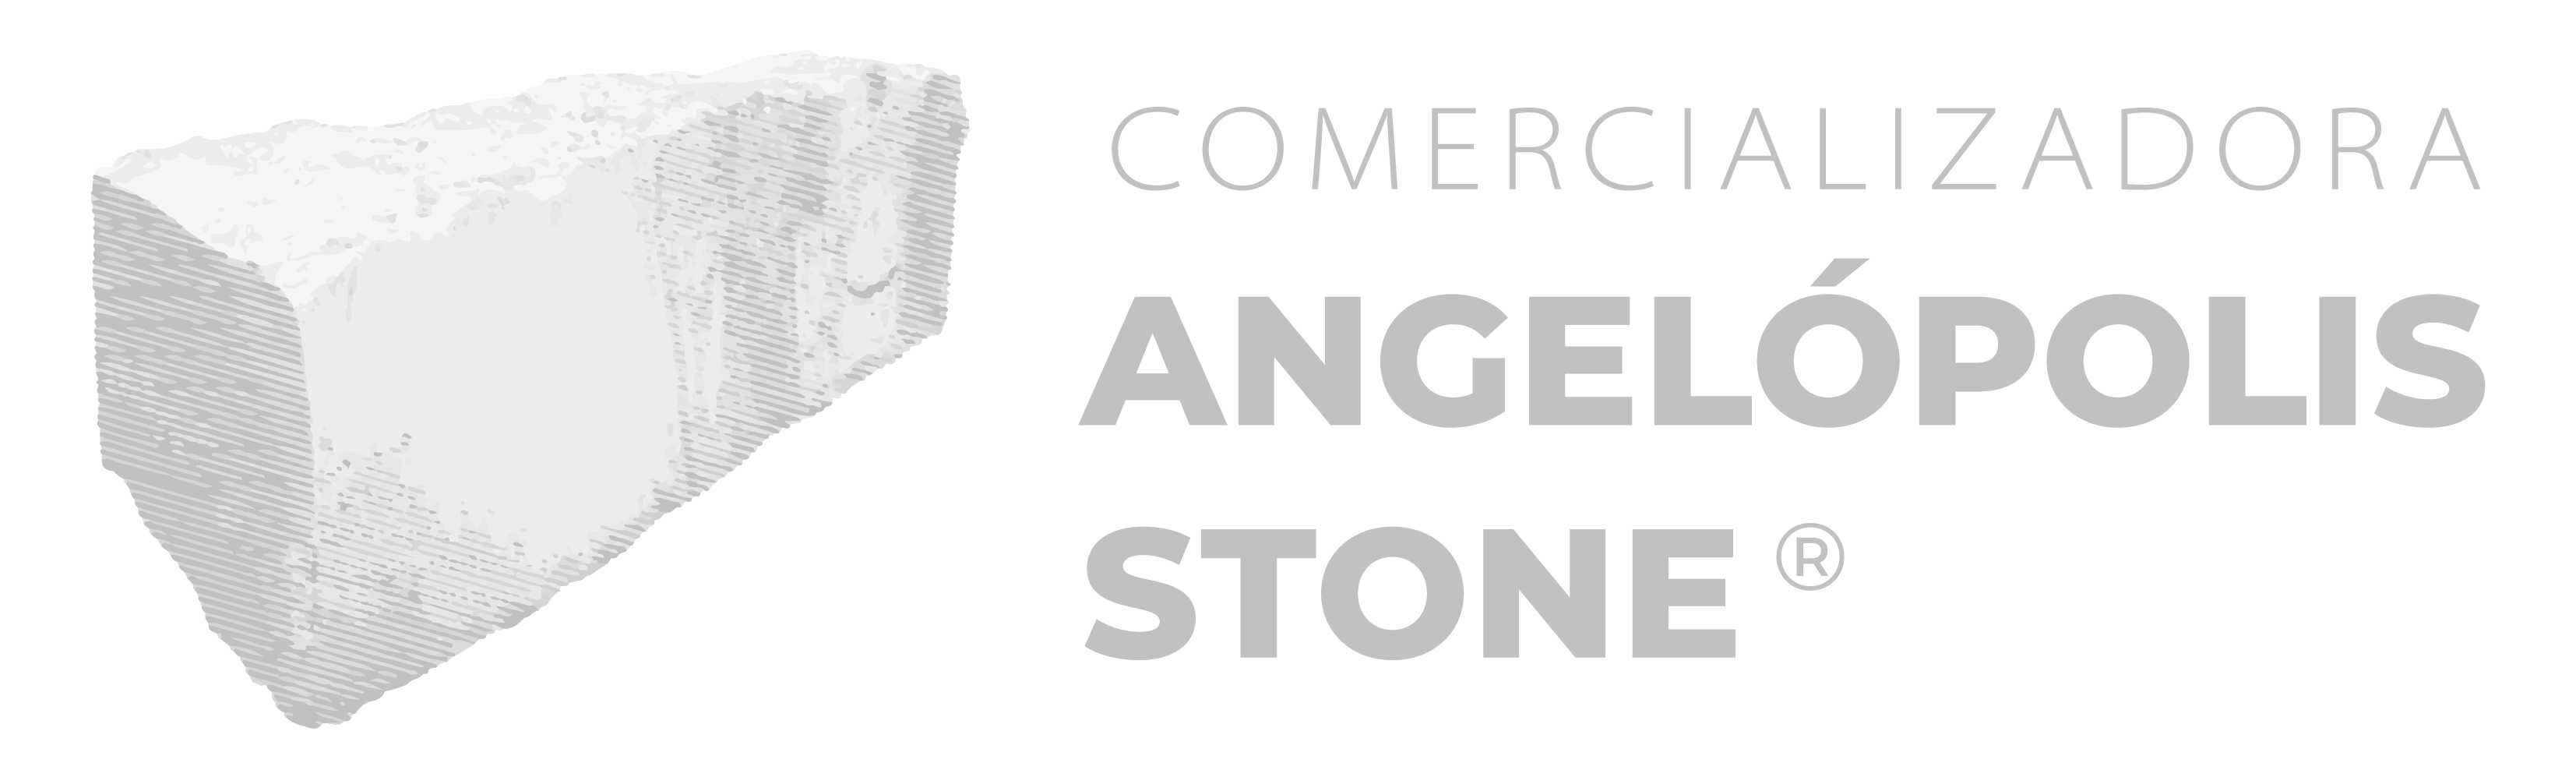 Cpmercializadora Angelopolis Stone-logo gris